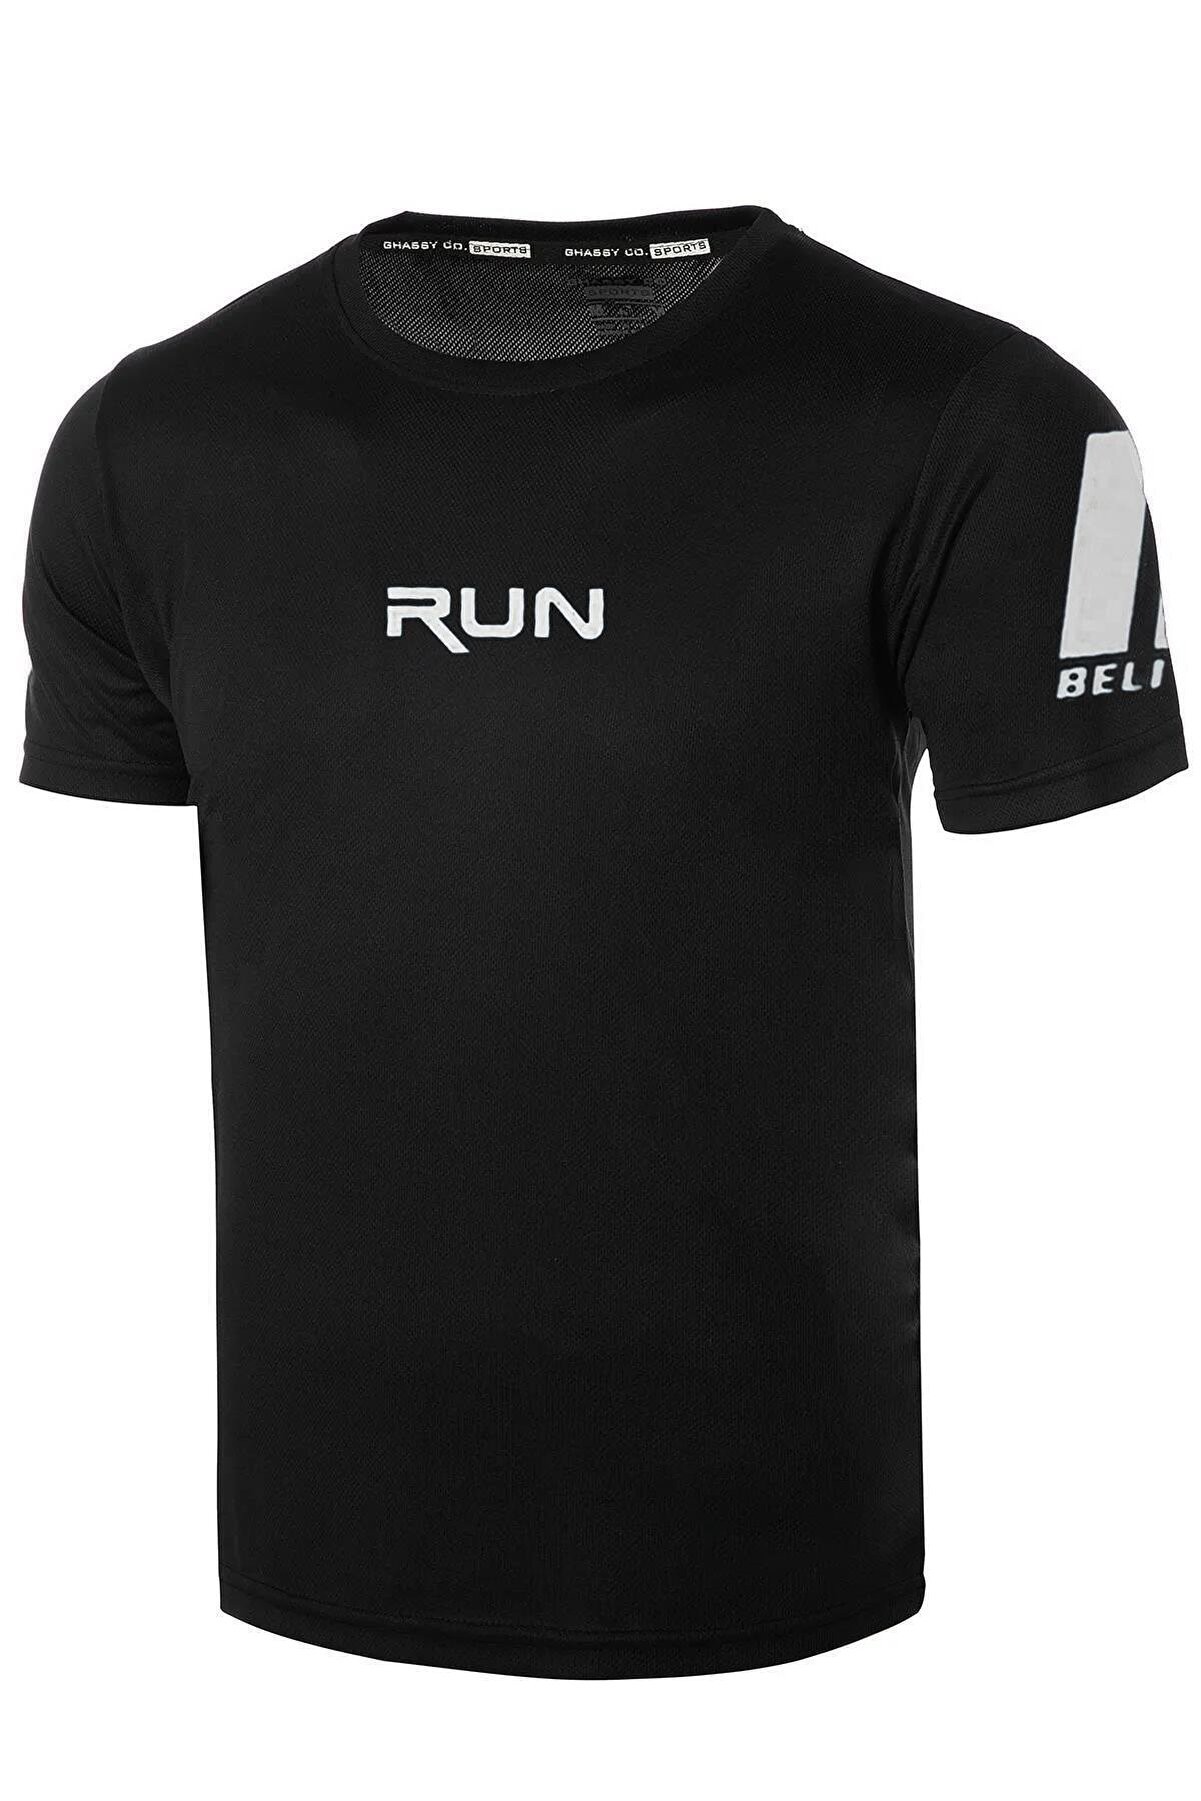 Ghassy Co Ghassy Co. Erkek Nem Emici Hızlı Kuruma Performans Running Spor T-shirt - Siyah